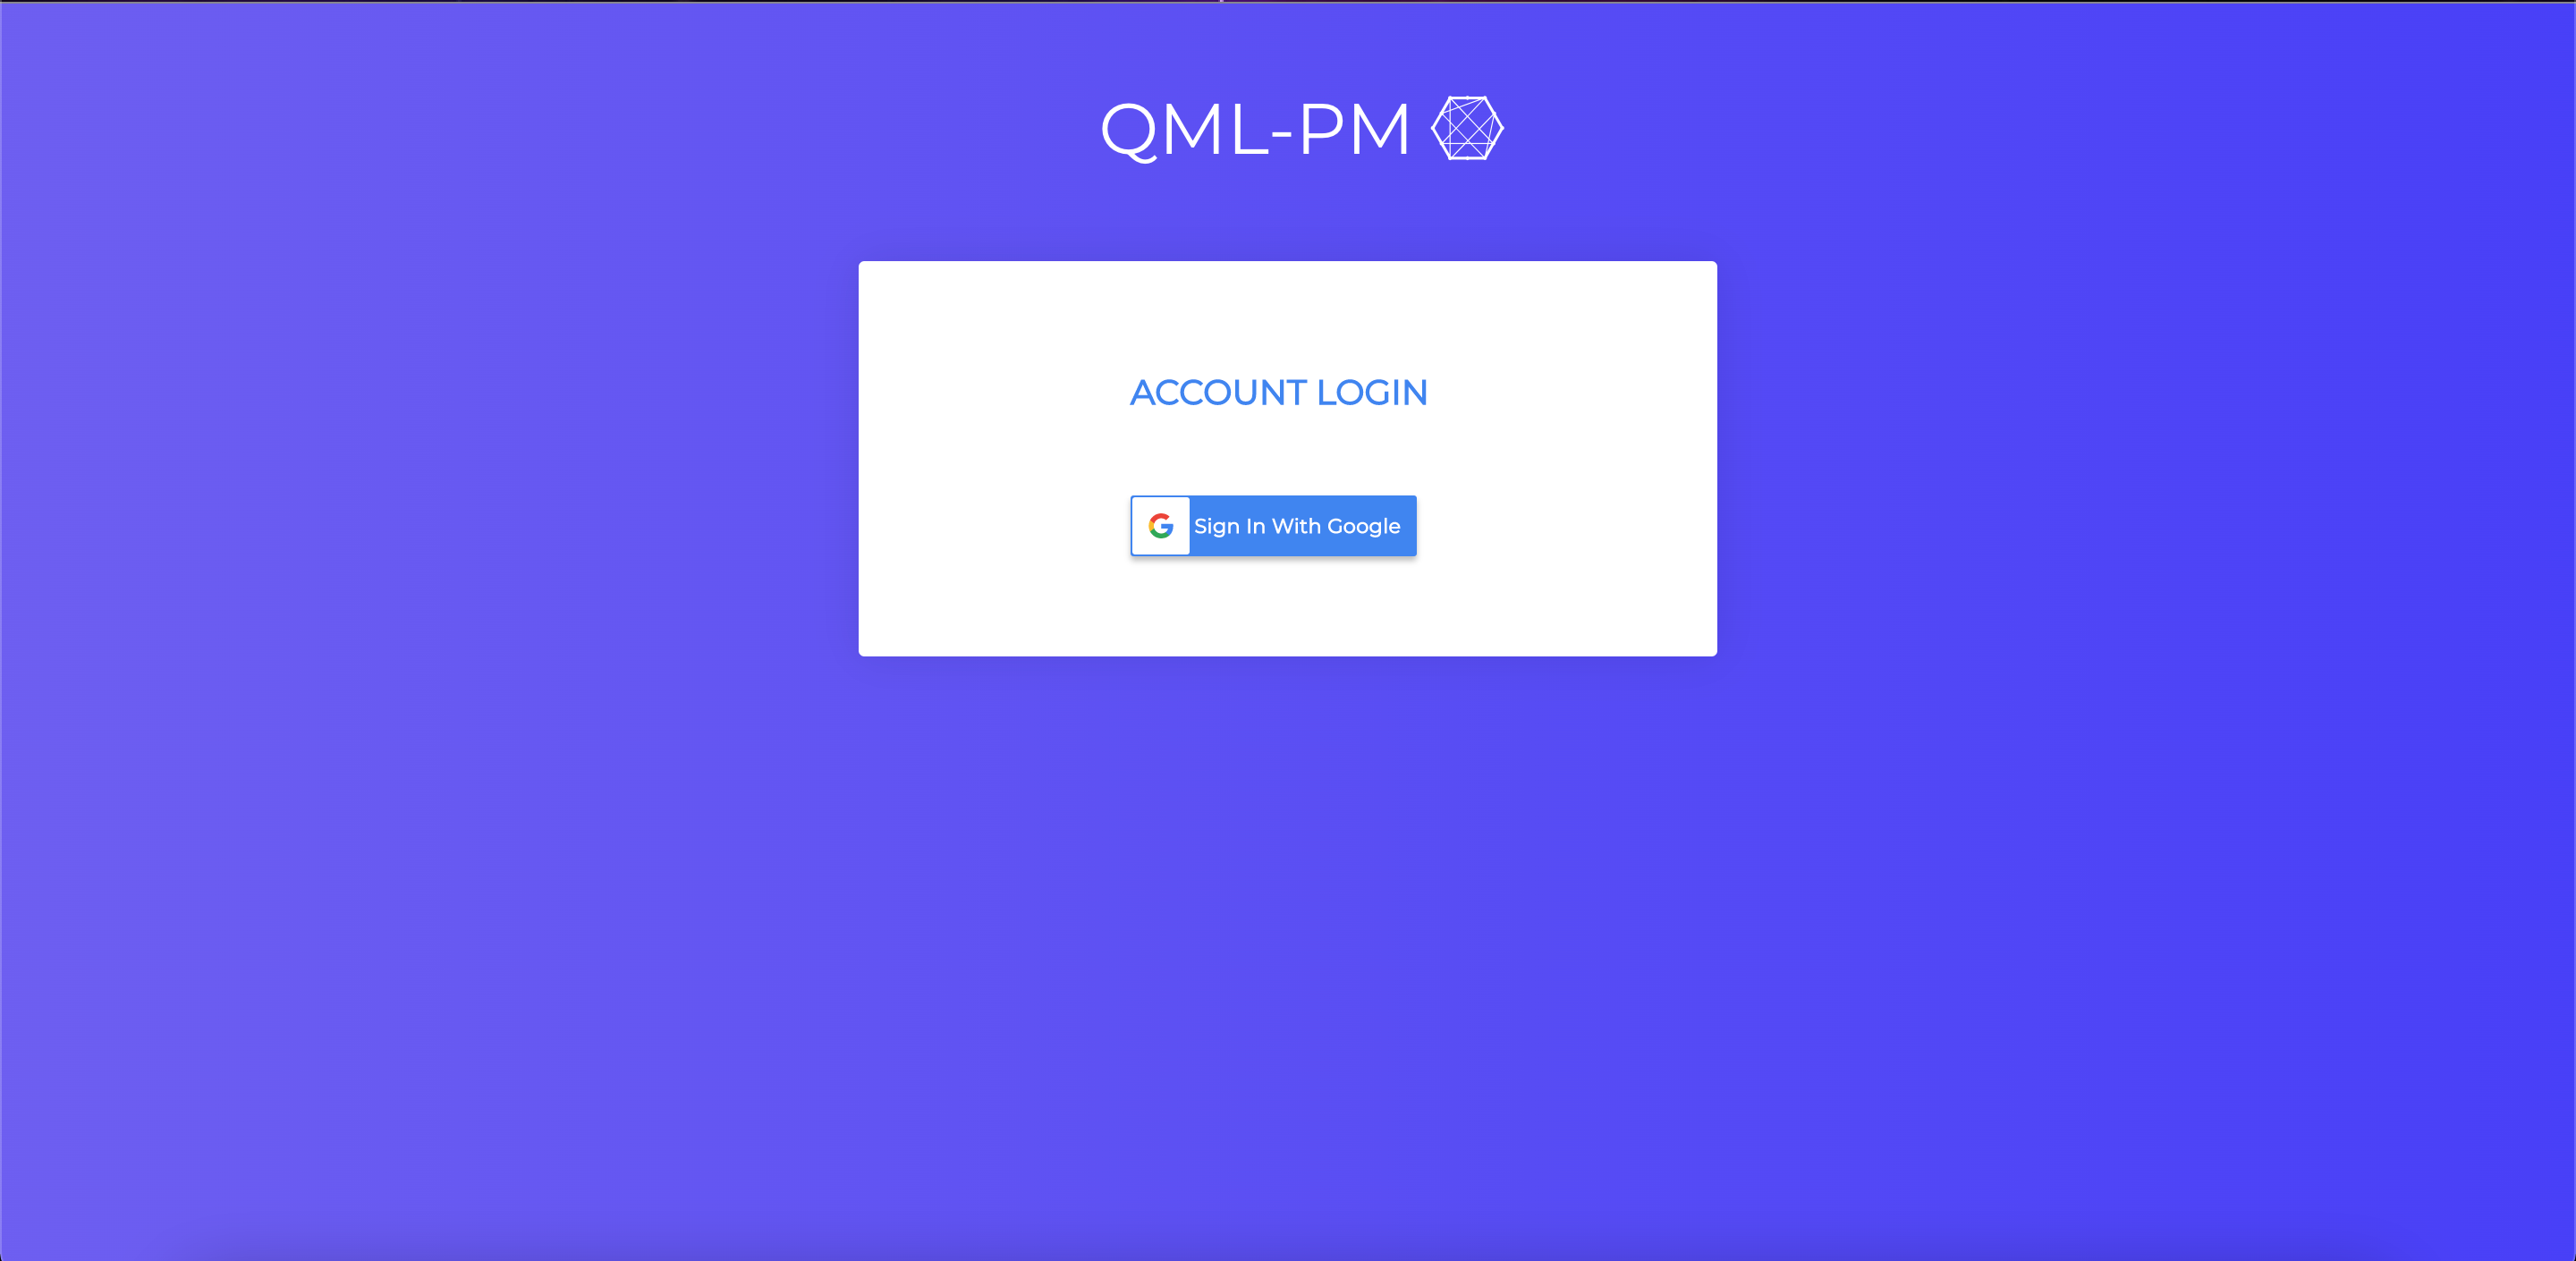 ./assets/QML-PM_LOGIN.png